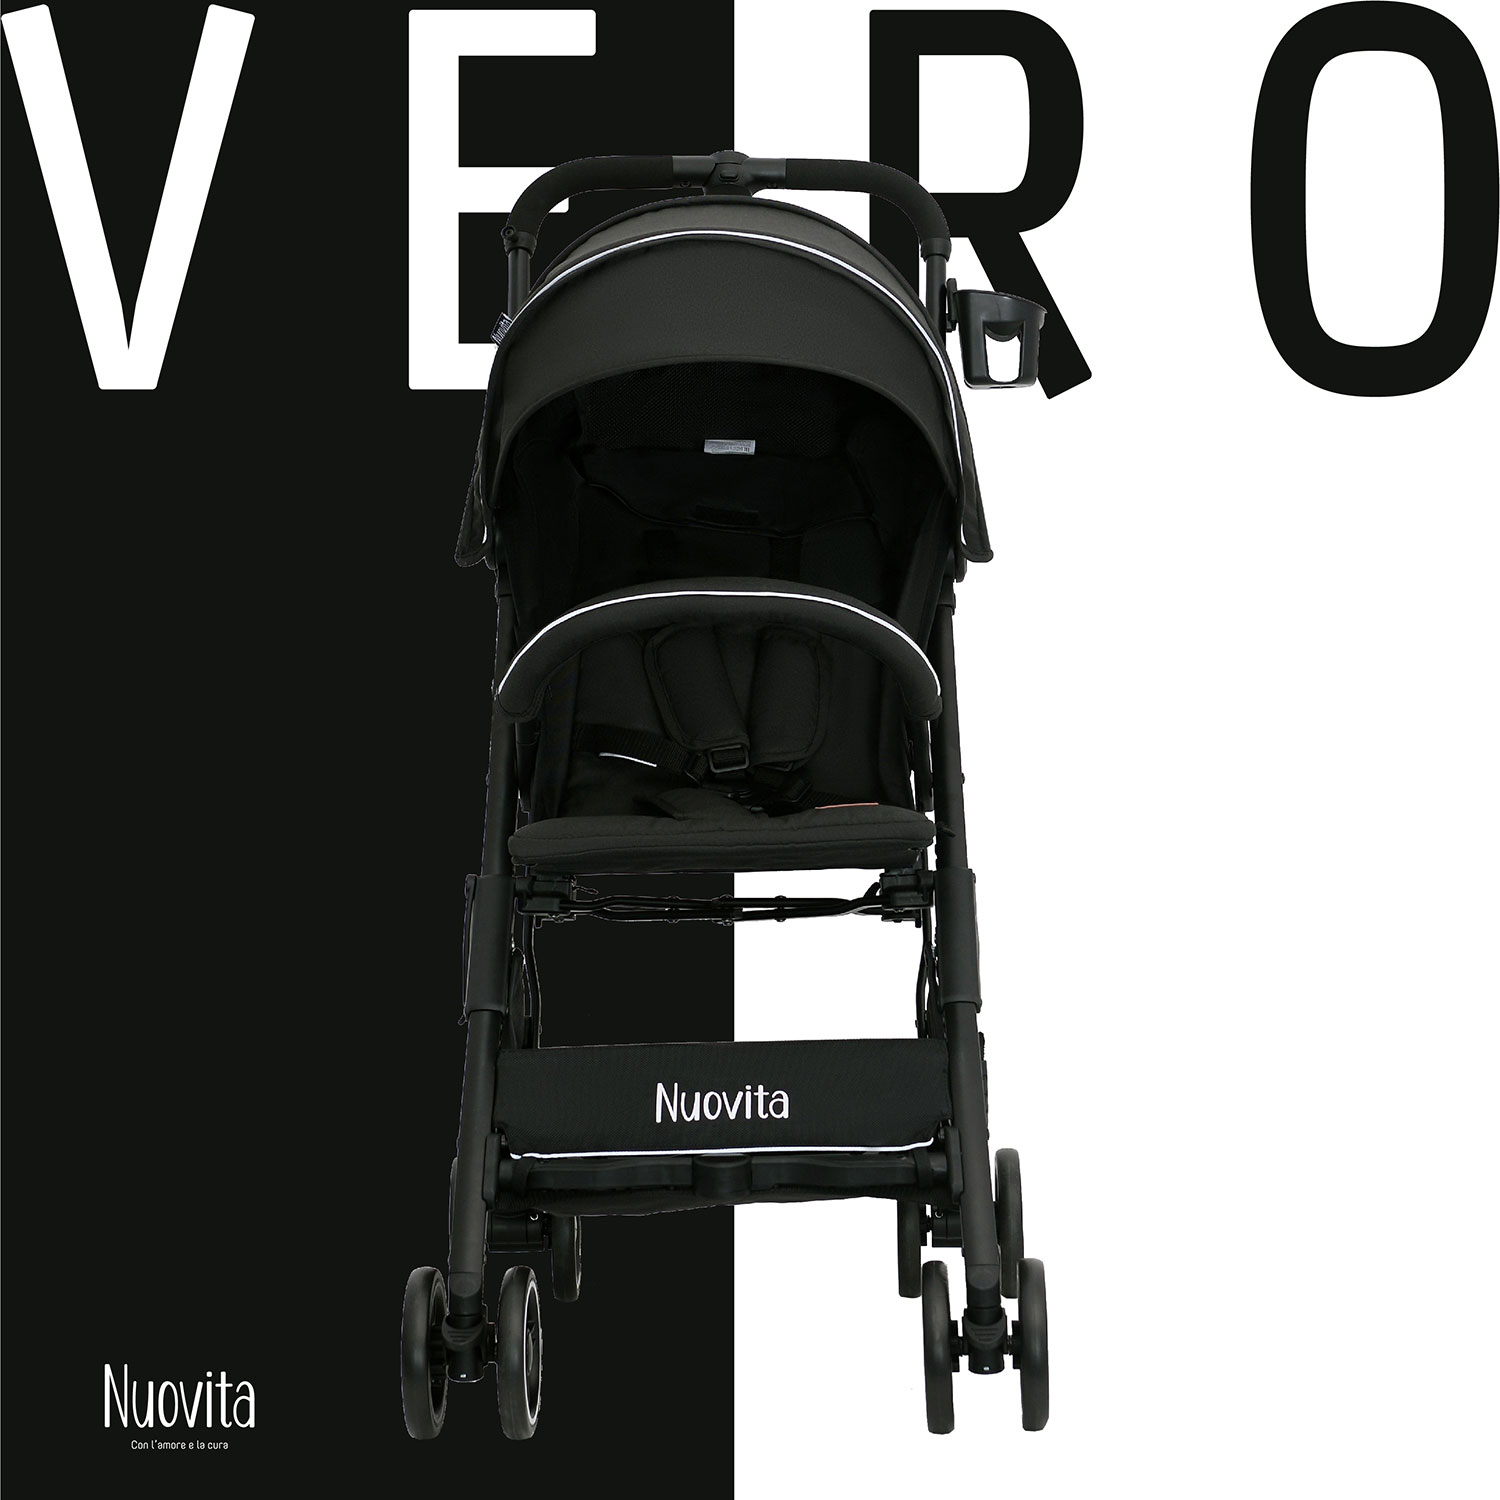 Прогулочная коляска Nuovita Vero Nero Черный прогулочная коляска nuovita corso nero nero